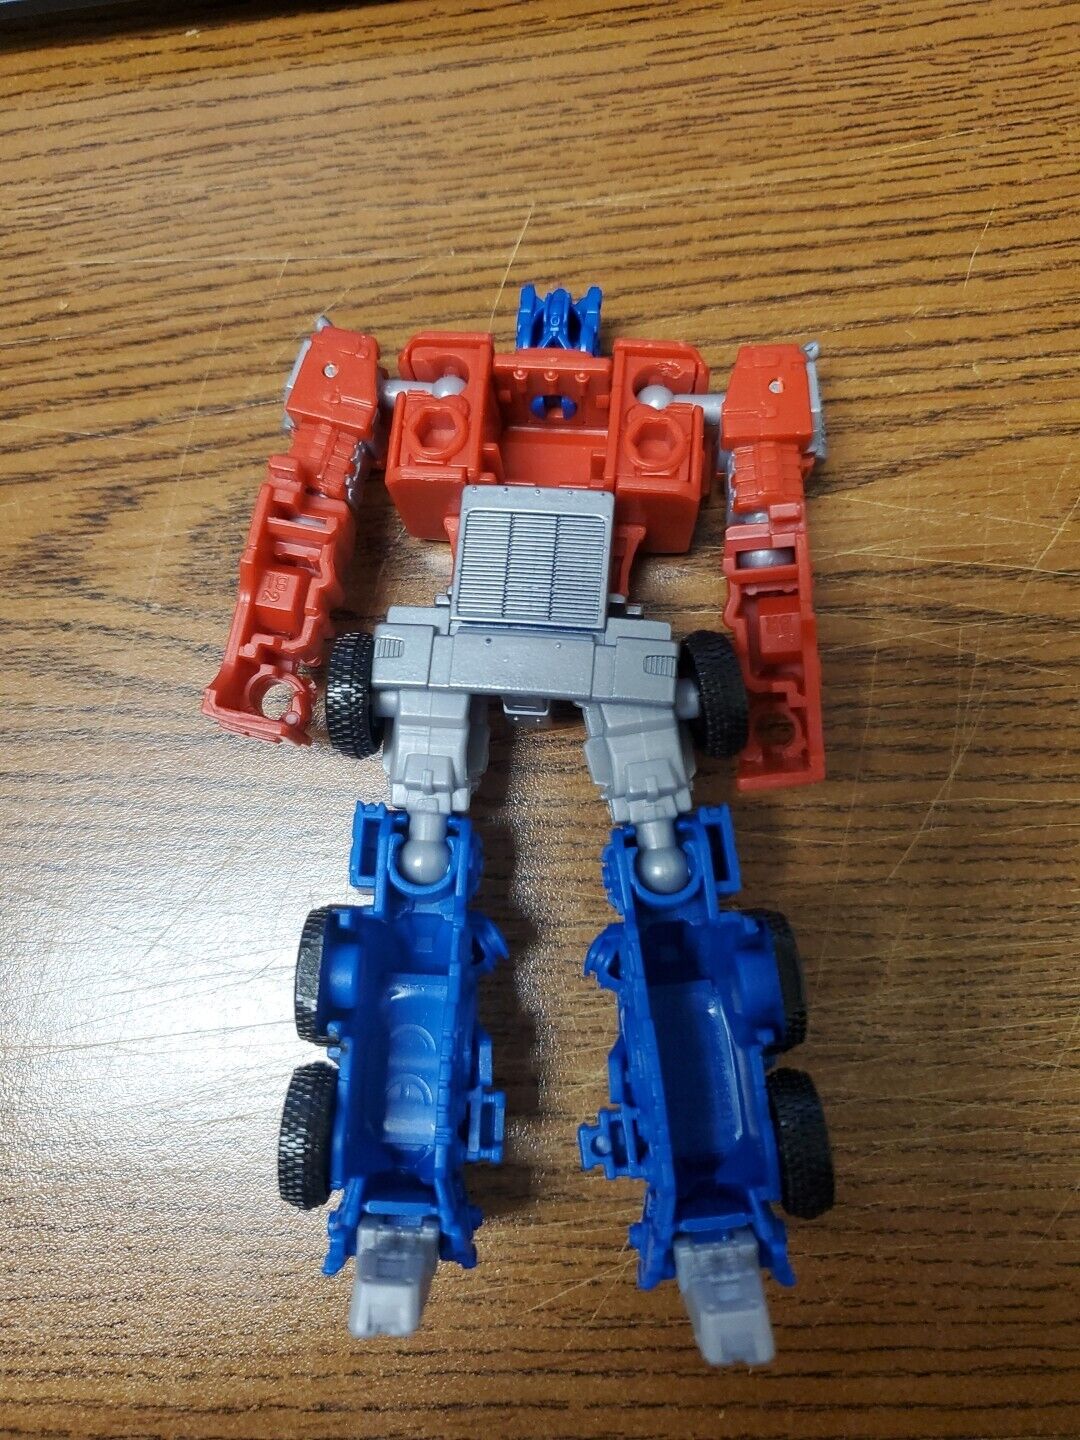 Transformers Beast Awakening Optimus Prime Takara Tomy Toy Figure